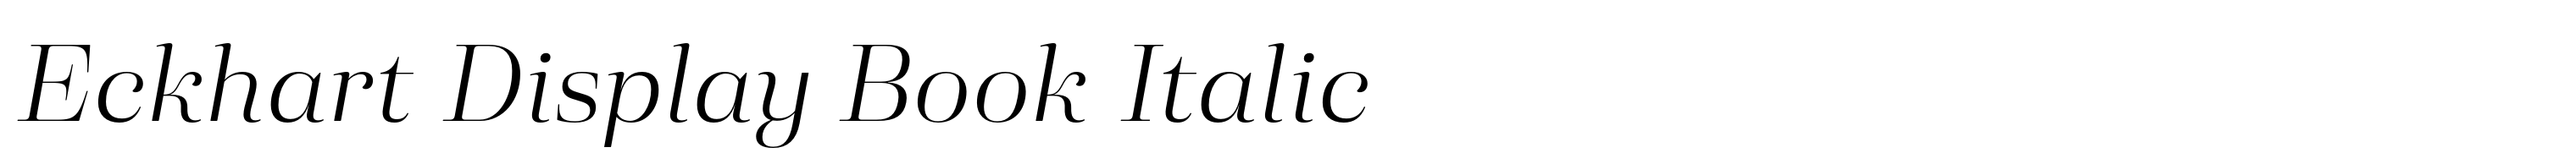 Eckhart Display Book Italic